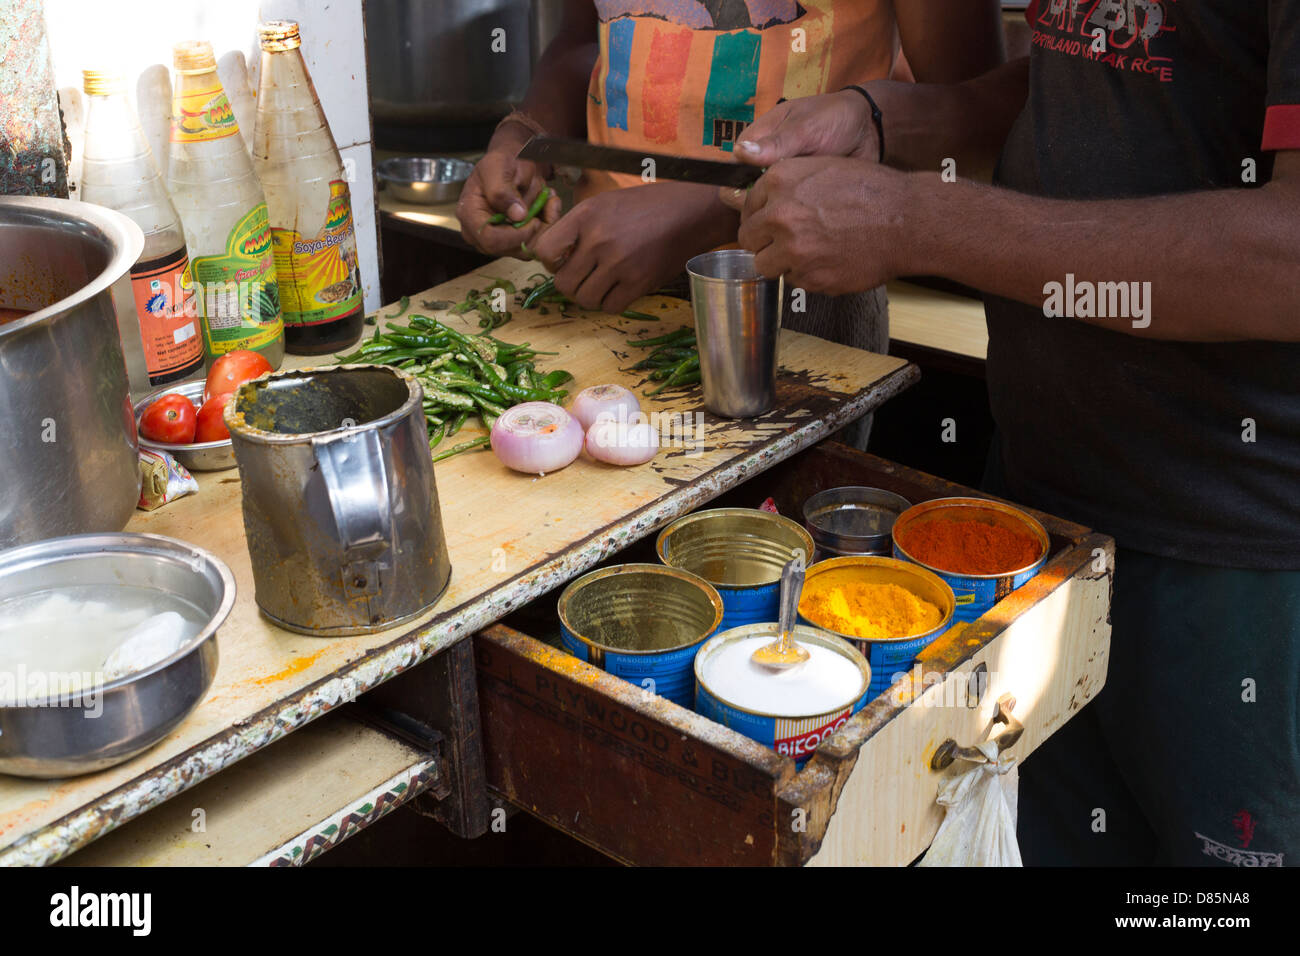 India, Uttar Pradesh, New Delhi, back street scene near New Delhi Railway Station of men preparing vegetables Stock Photo